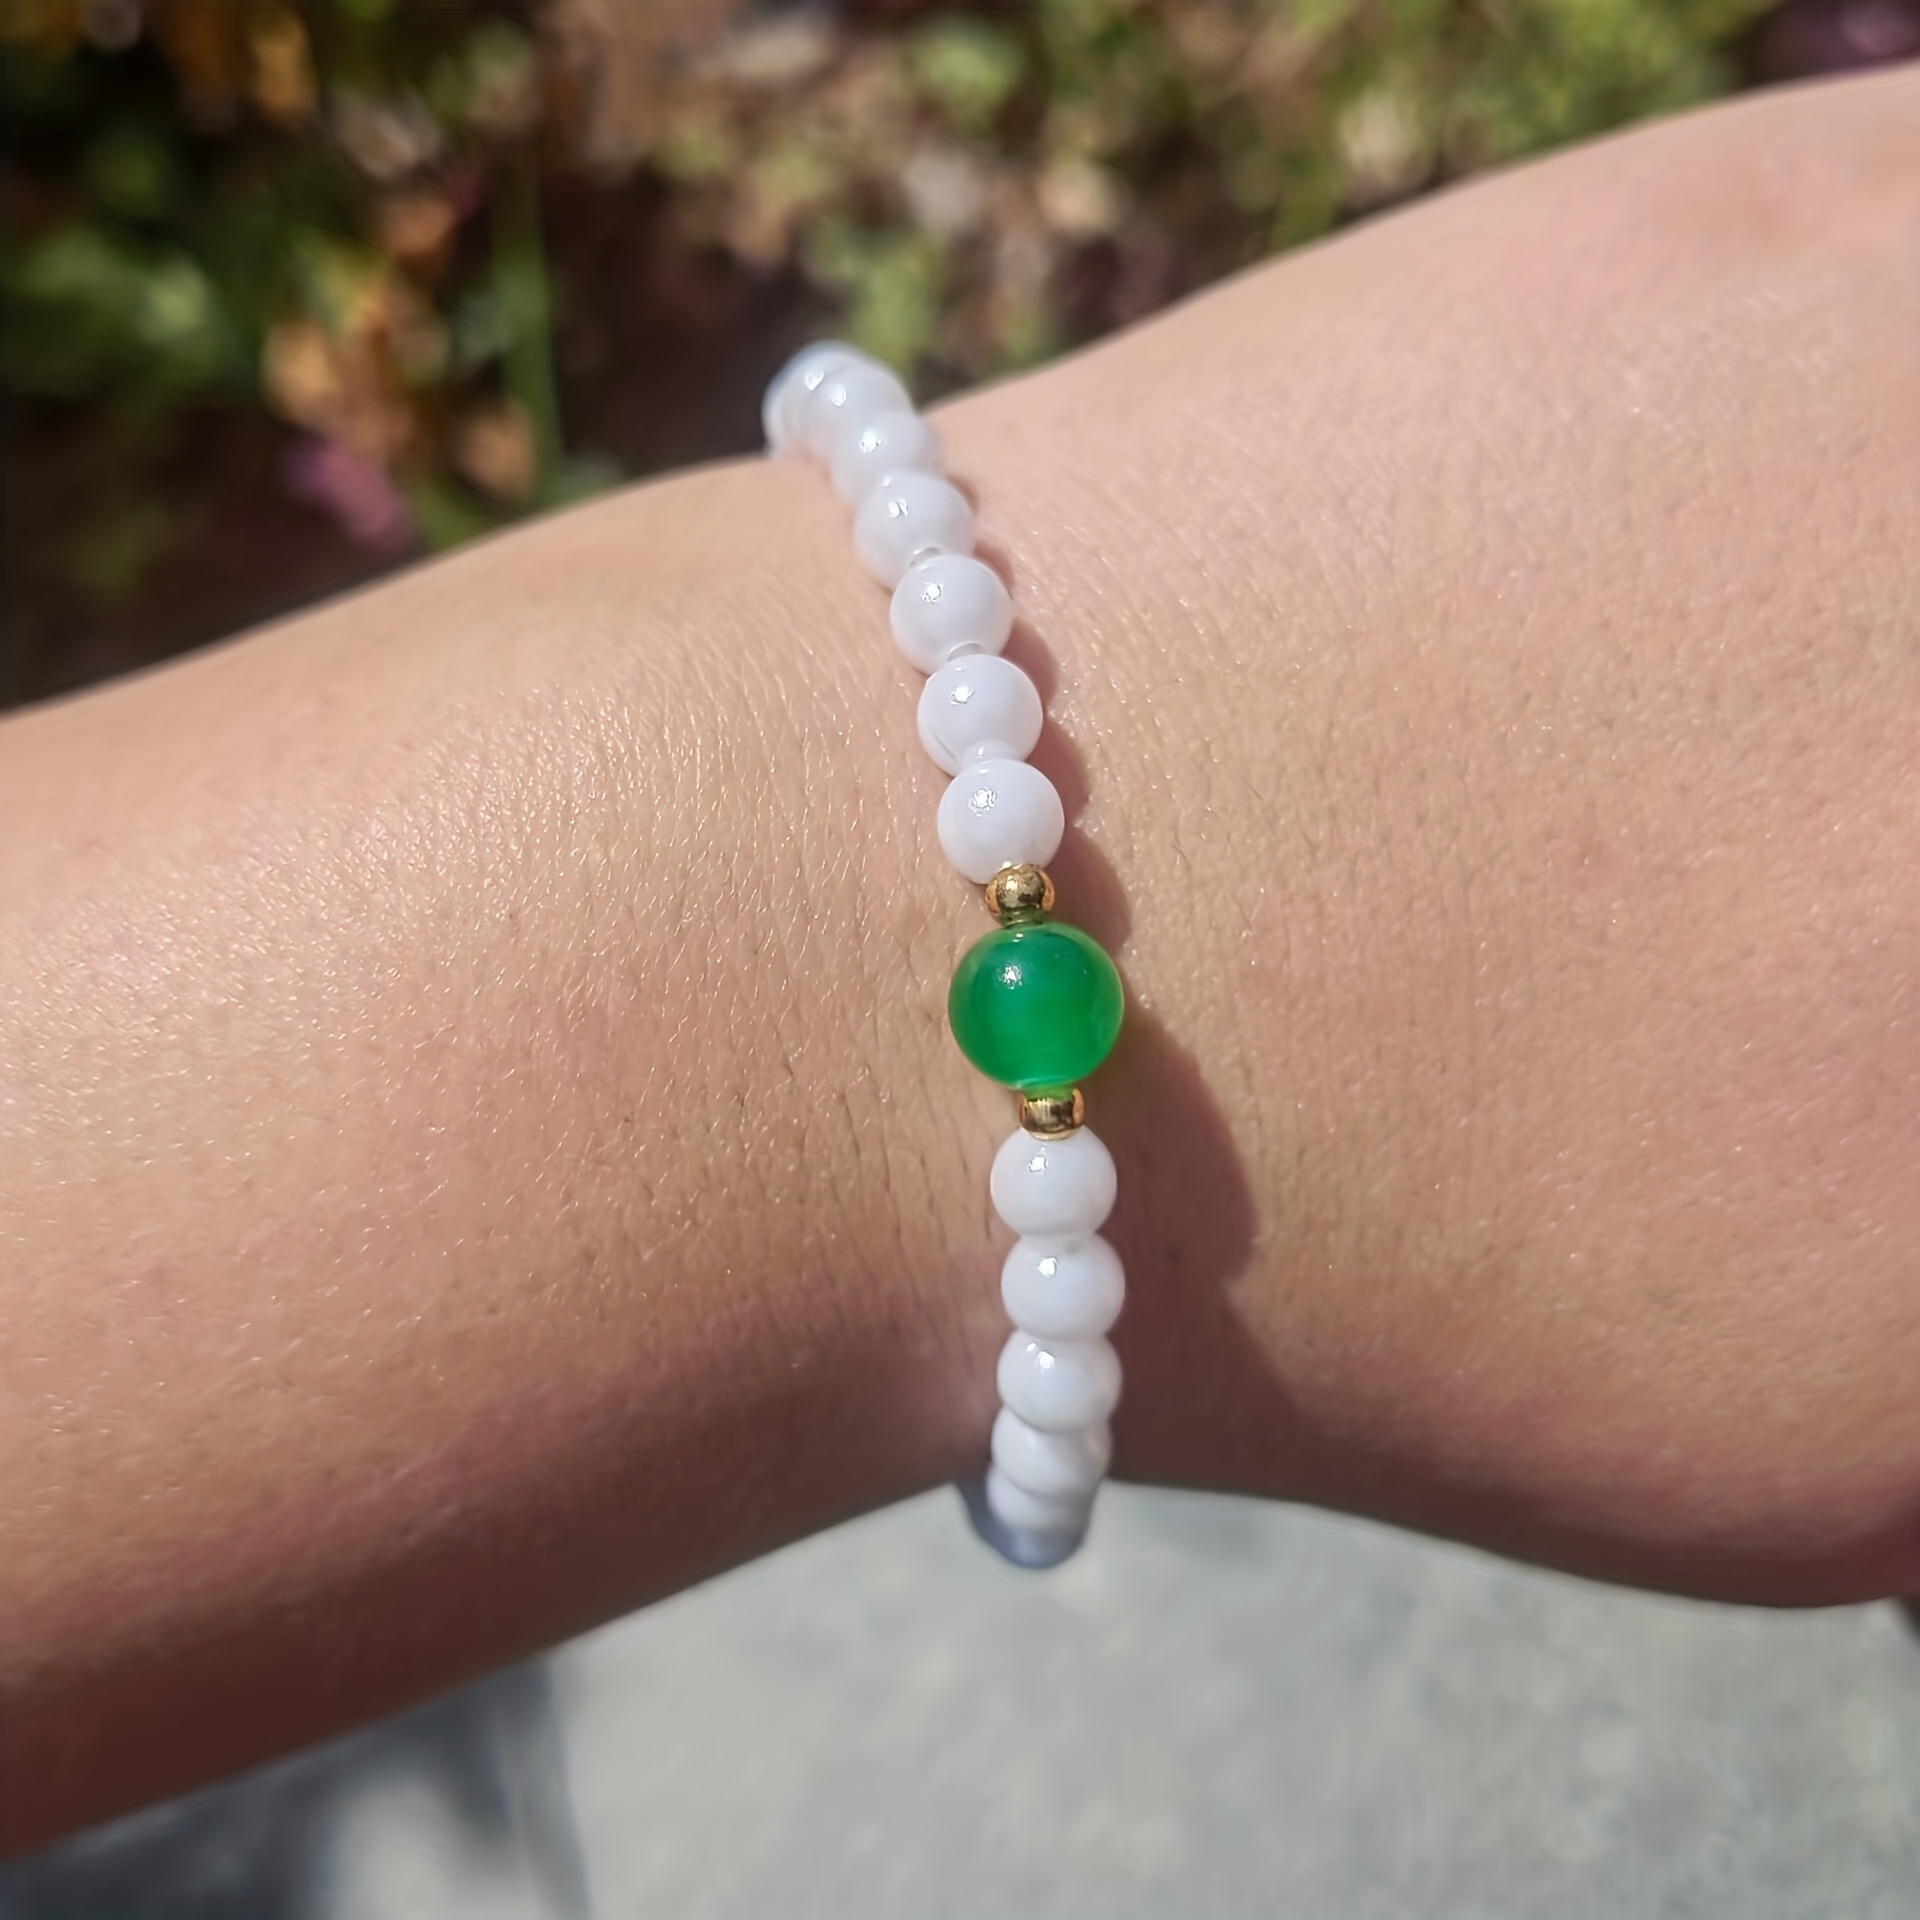 Pearl Bracelet Design-How to Make a Green Pearl Bead Bracelet